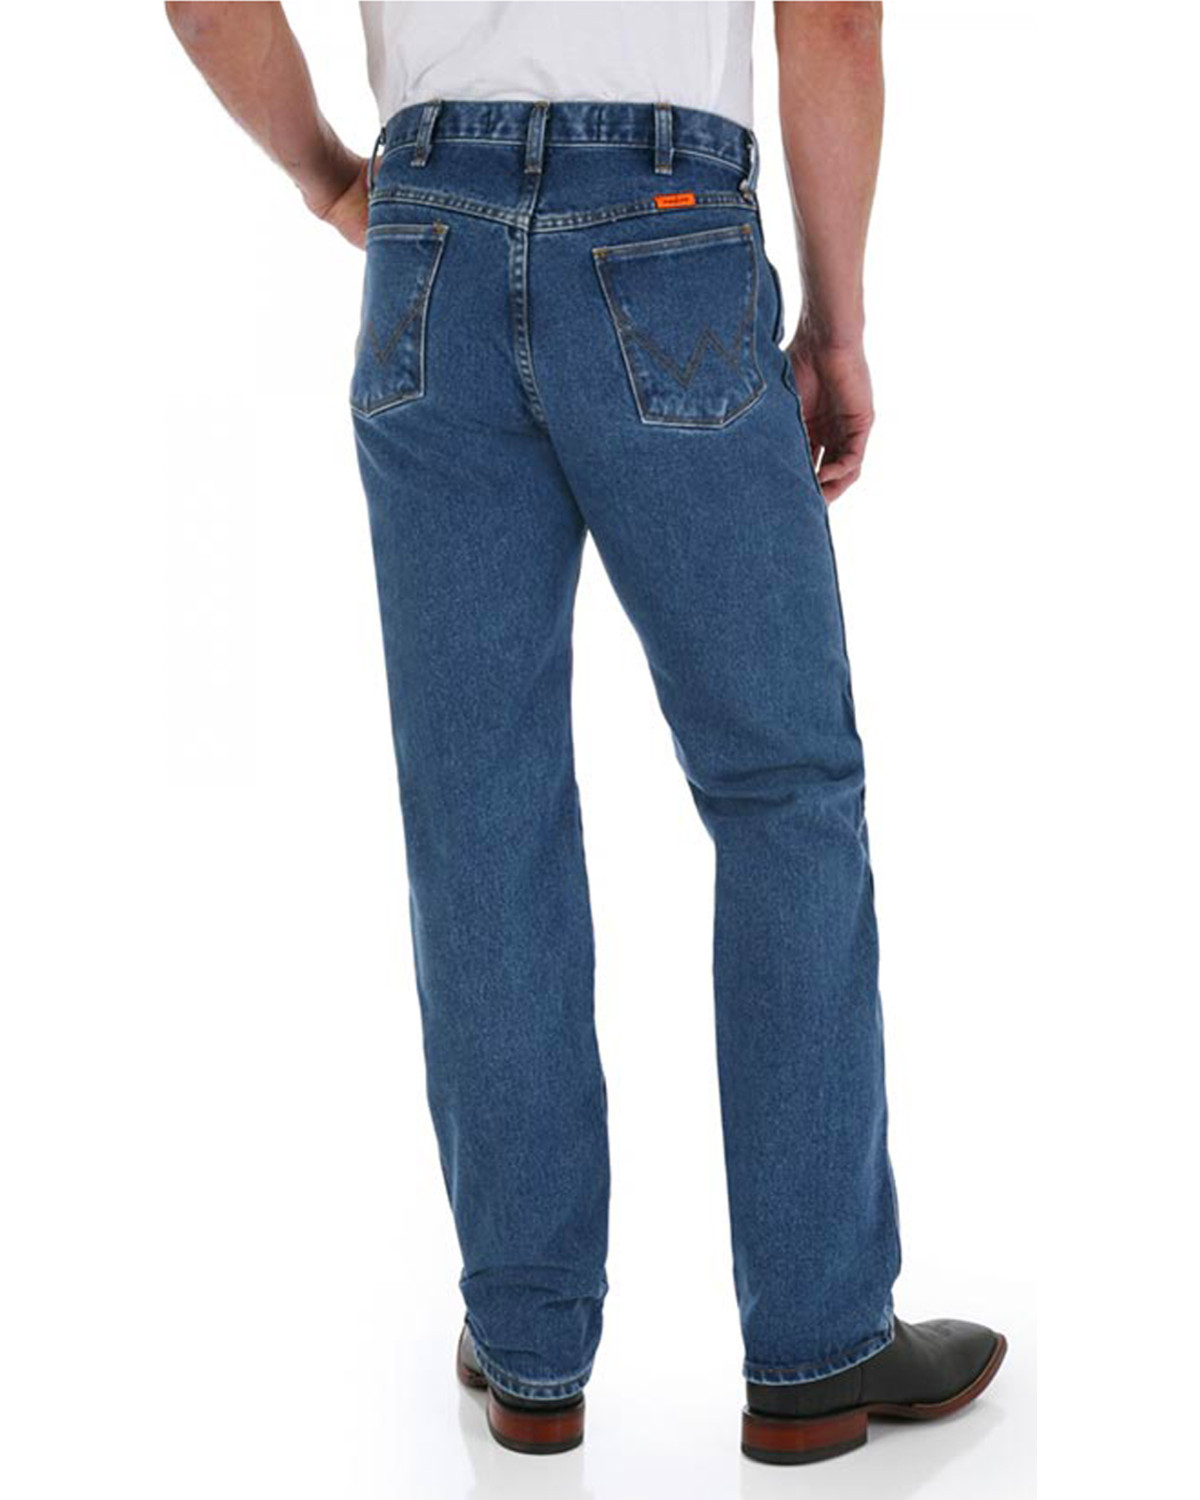 Wrangler Men's Blue FR Flame-Resistant Original Fit Jeans - Straight ...